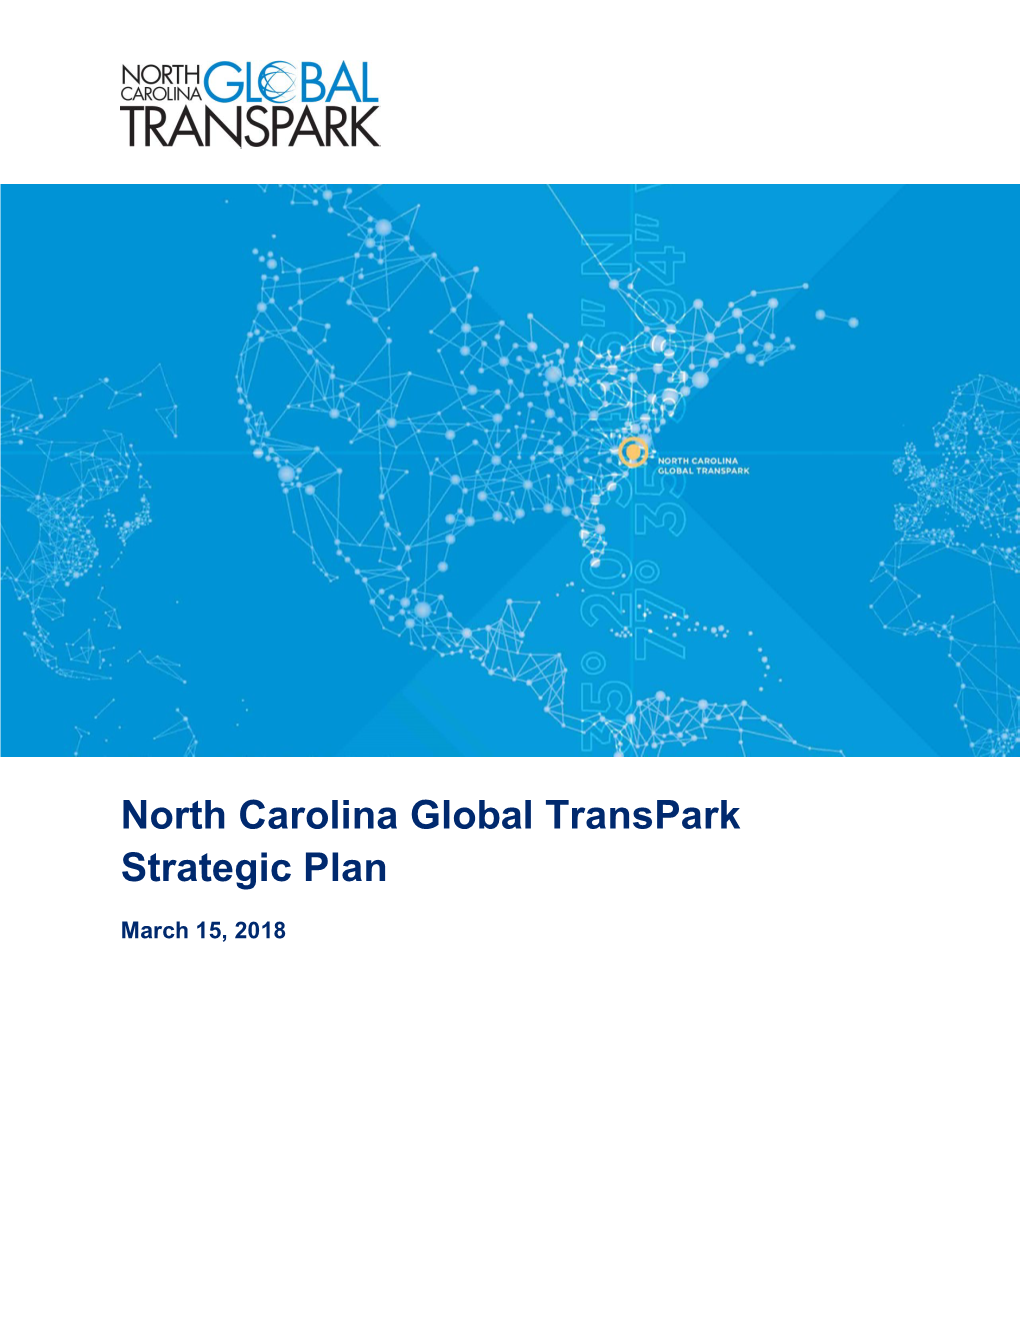 North Carolina Global Transpark Strategic Plan